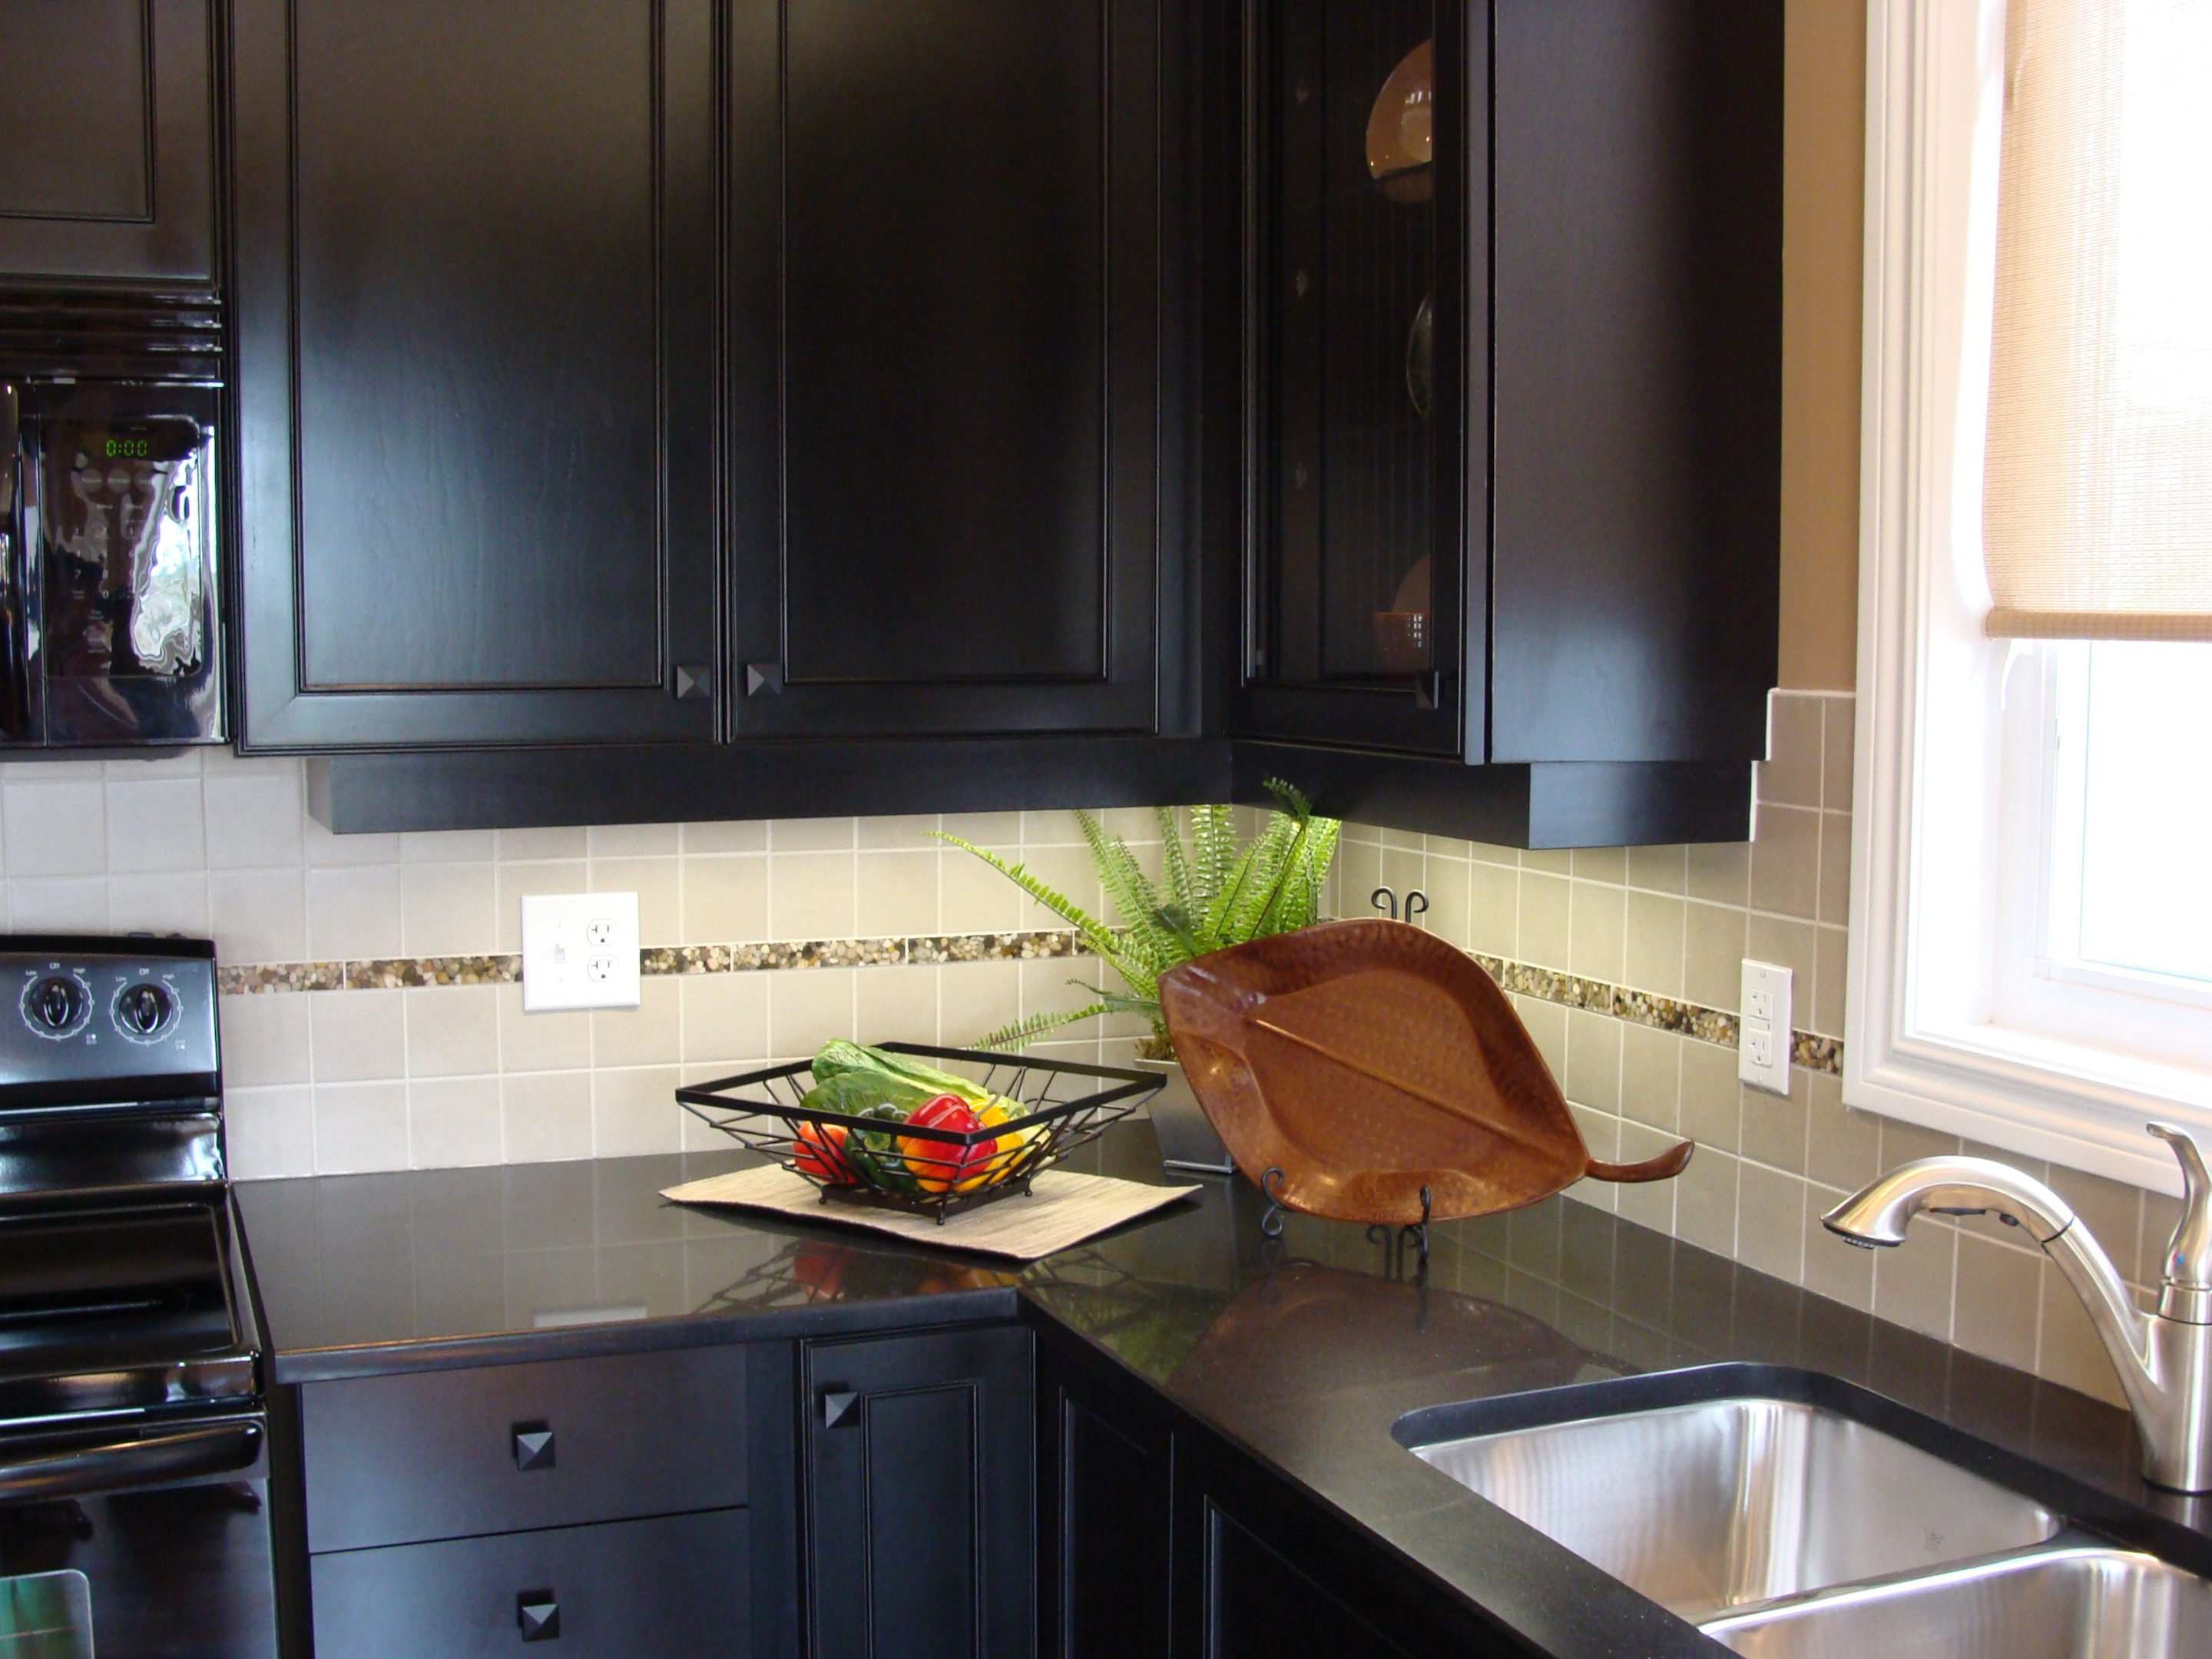 which kitchen countertops are the best, quartz countertops